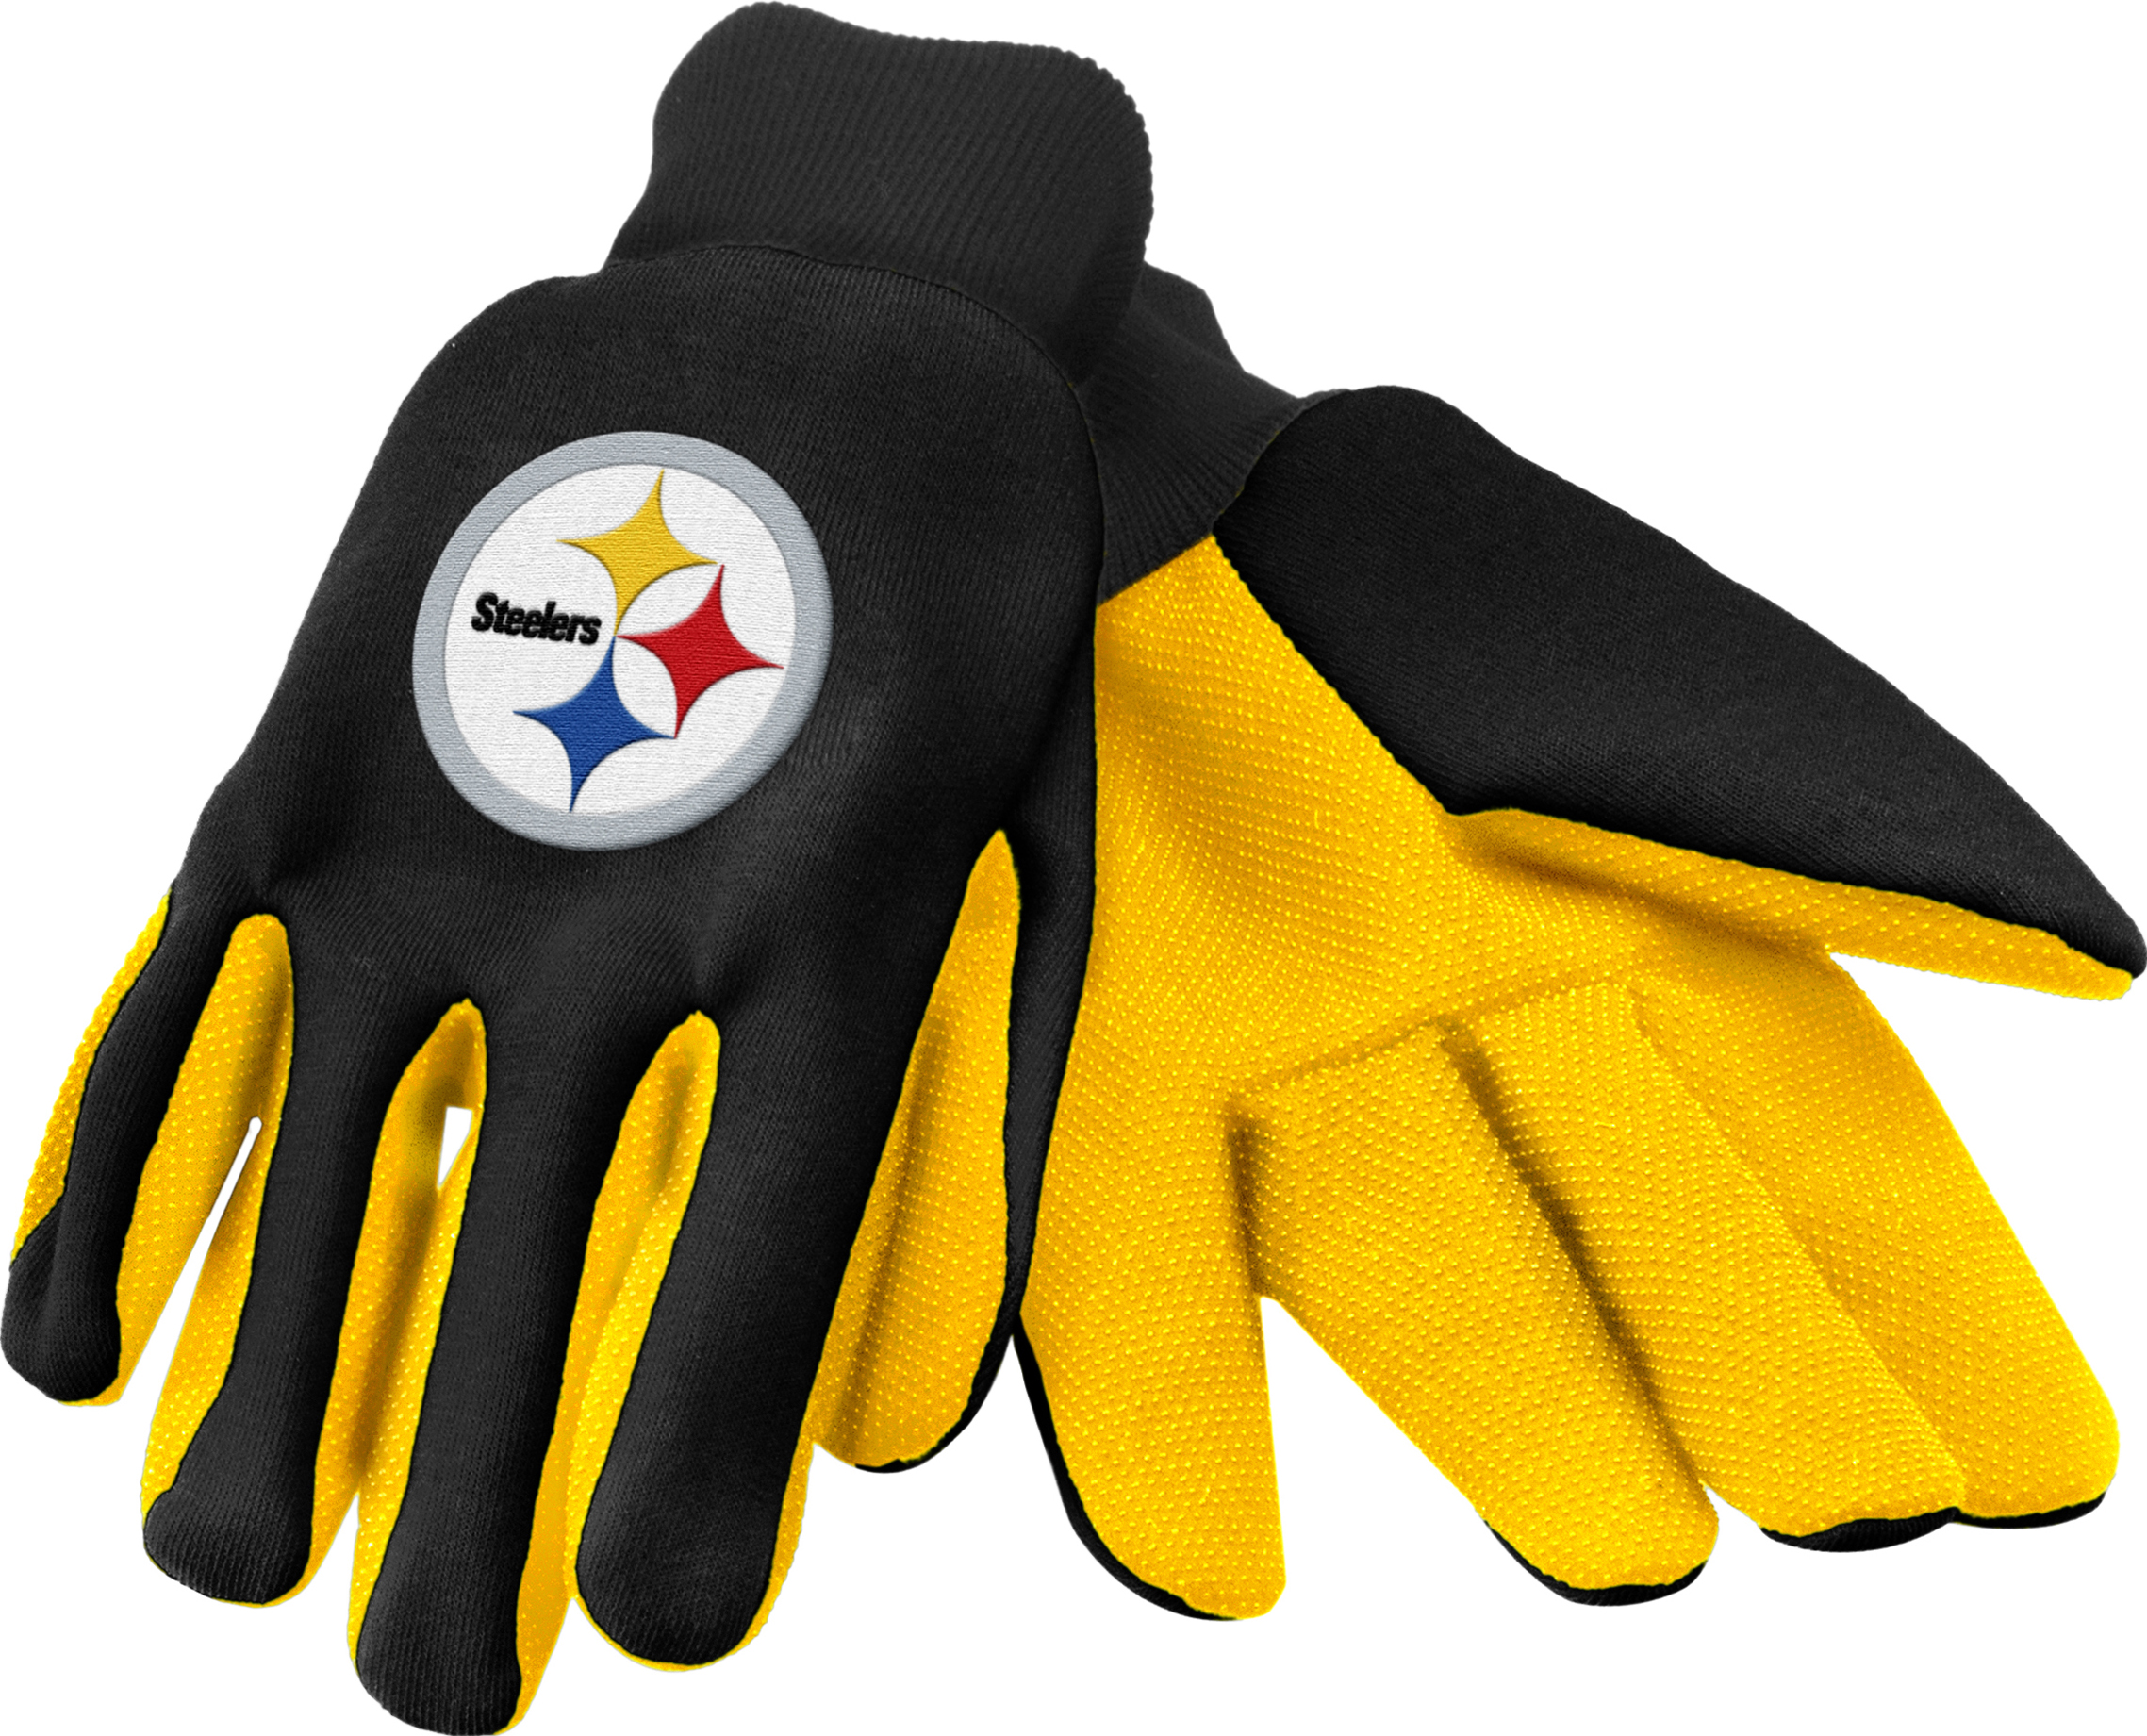 E106505 NFL Pittsburgh Steelers Premium Work Gloves